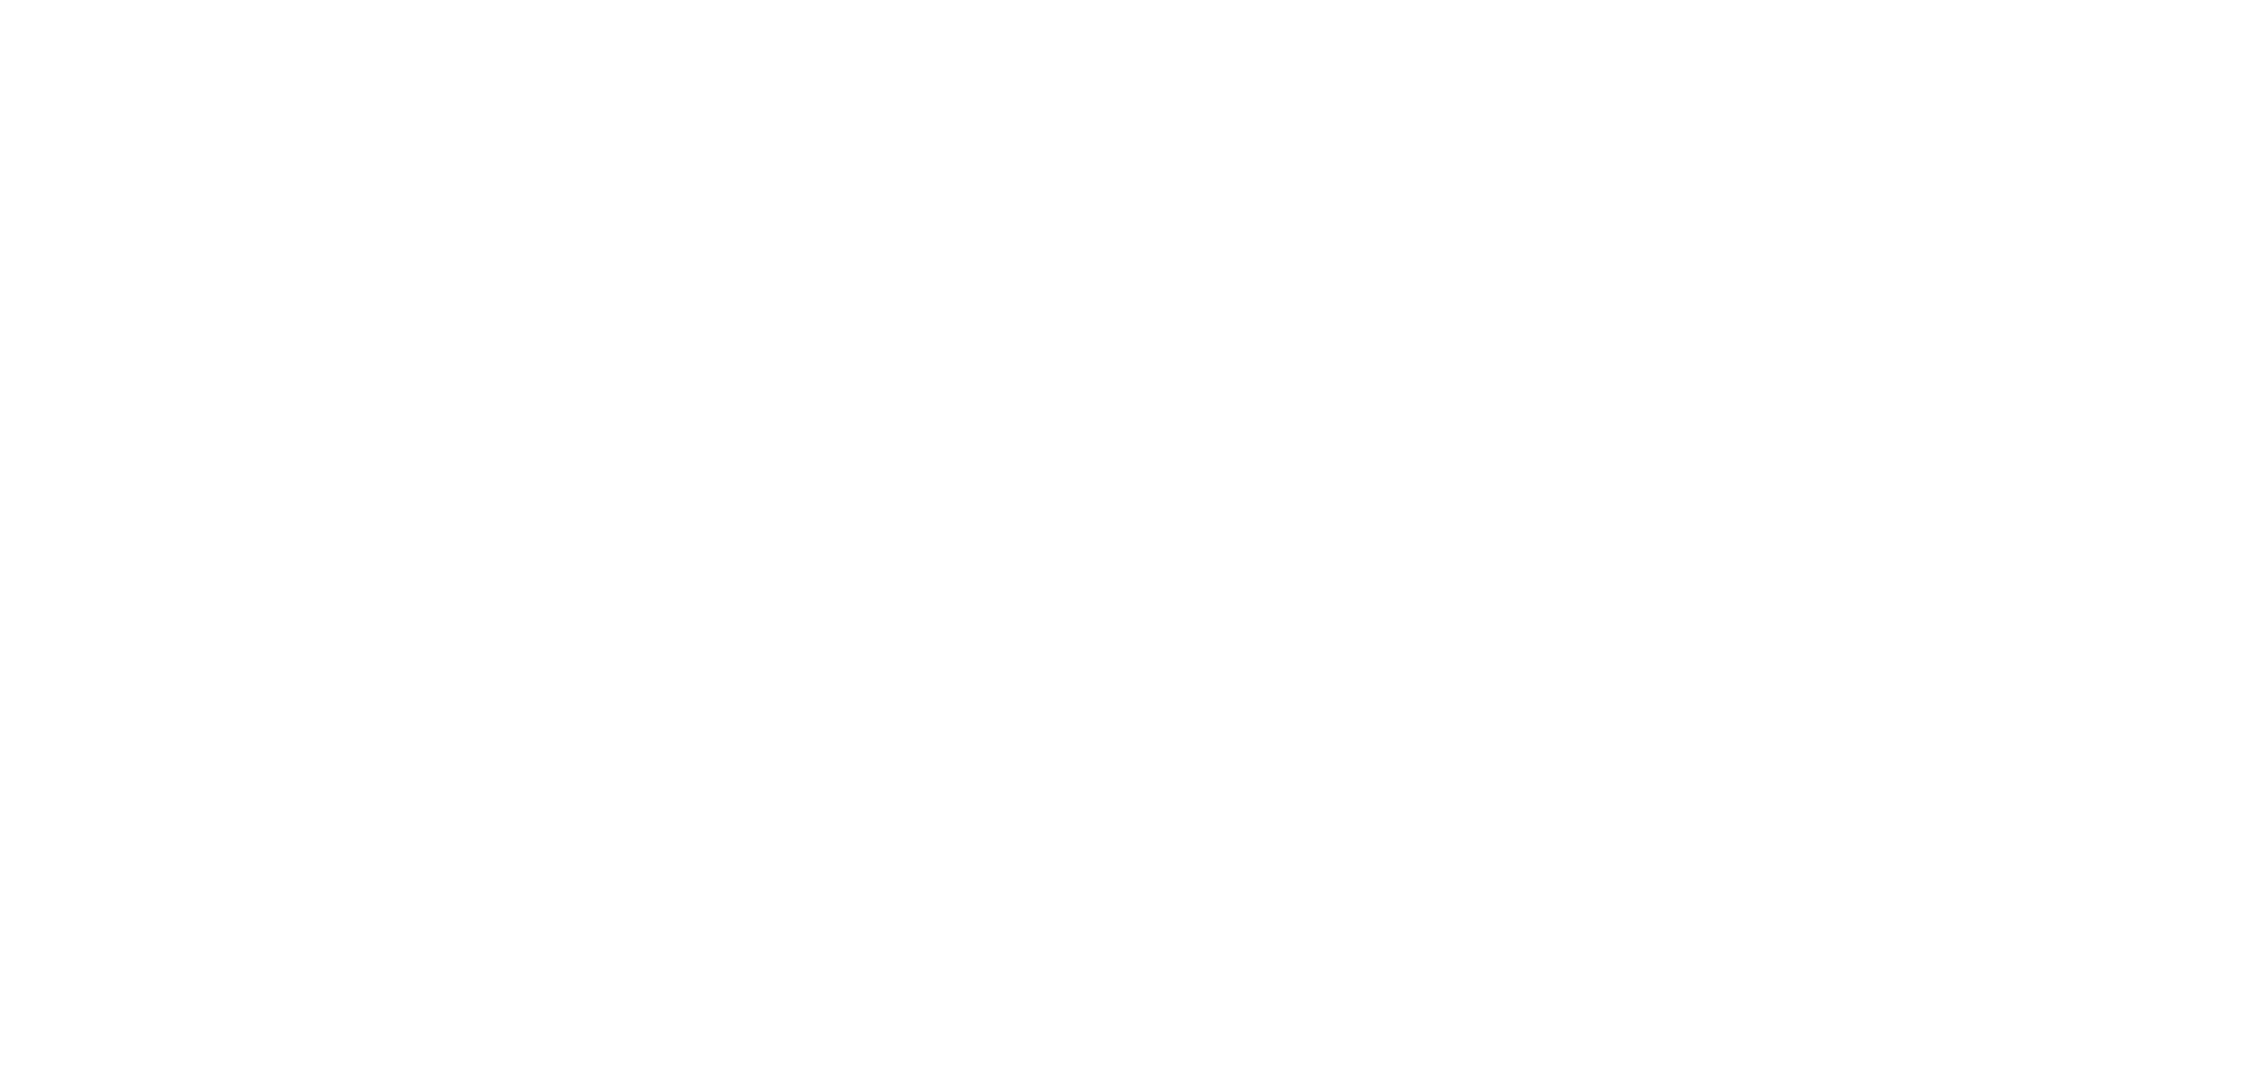 Ferguson Dental Associates